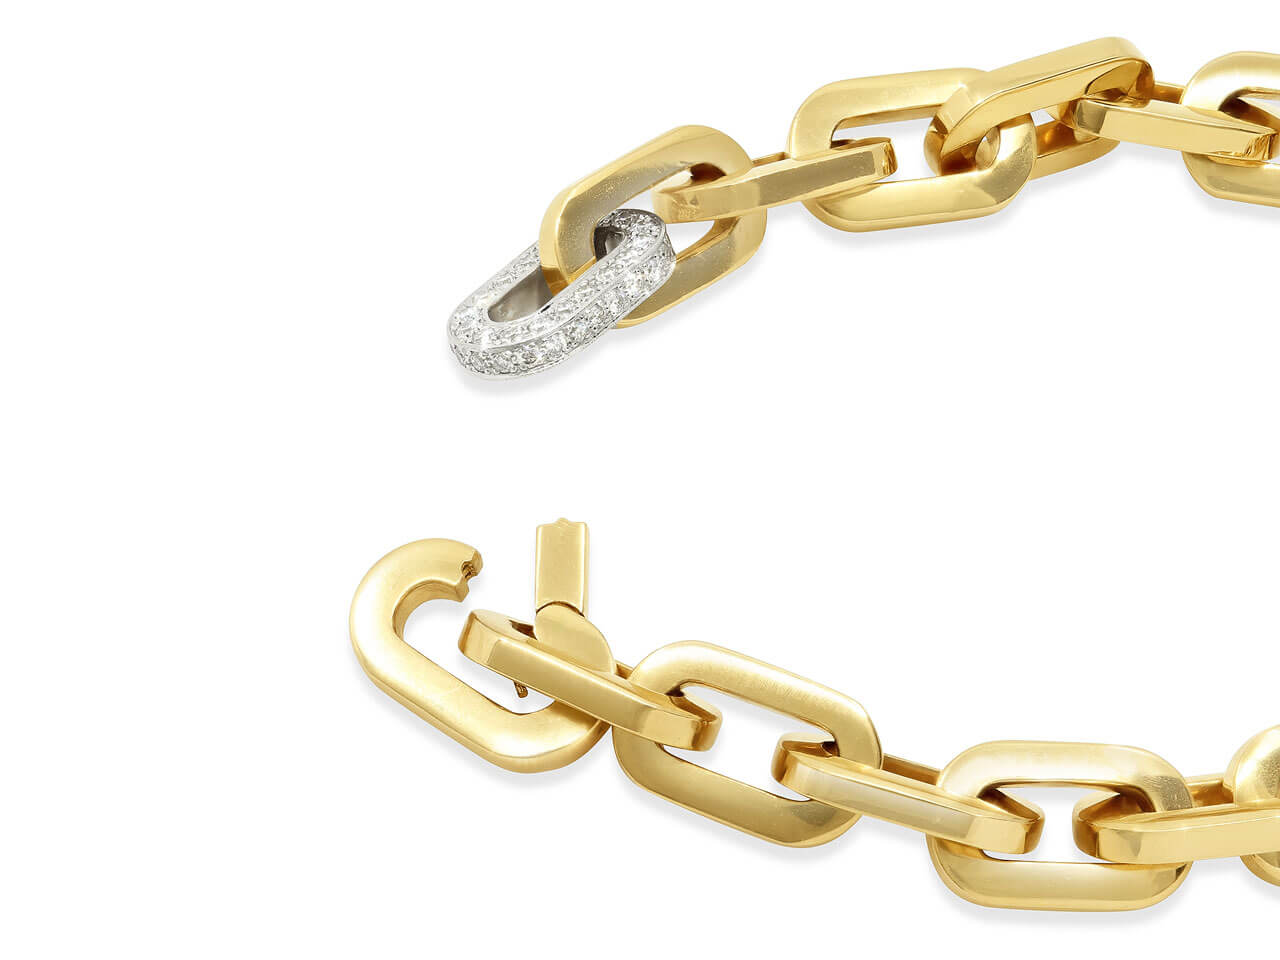 Italian Chain Link Bracelet with Diamonds in 18K Gold, by Beladora